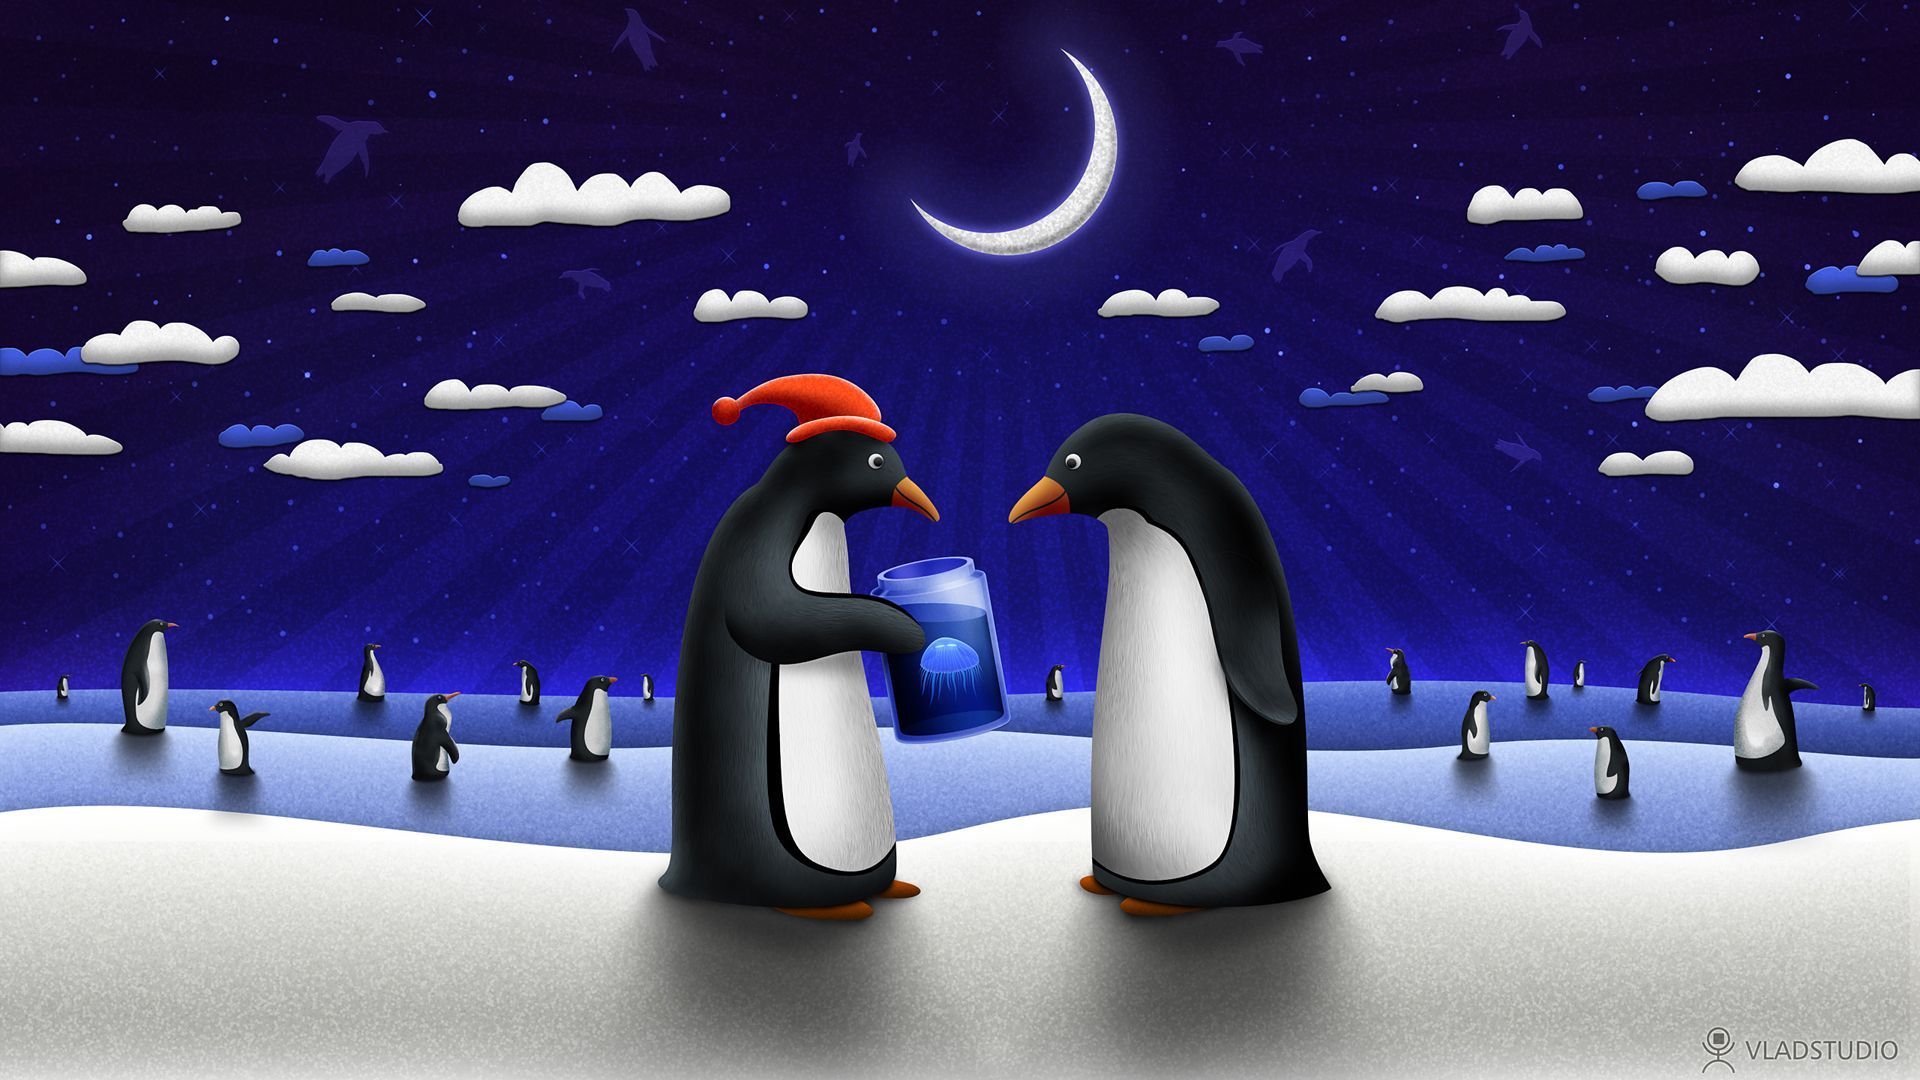 Digital art: Xmas Penguins, picture nr. 33957